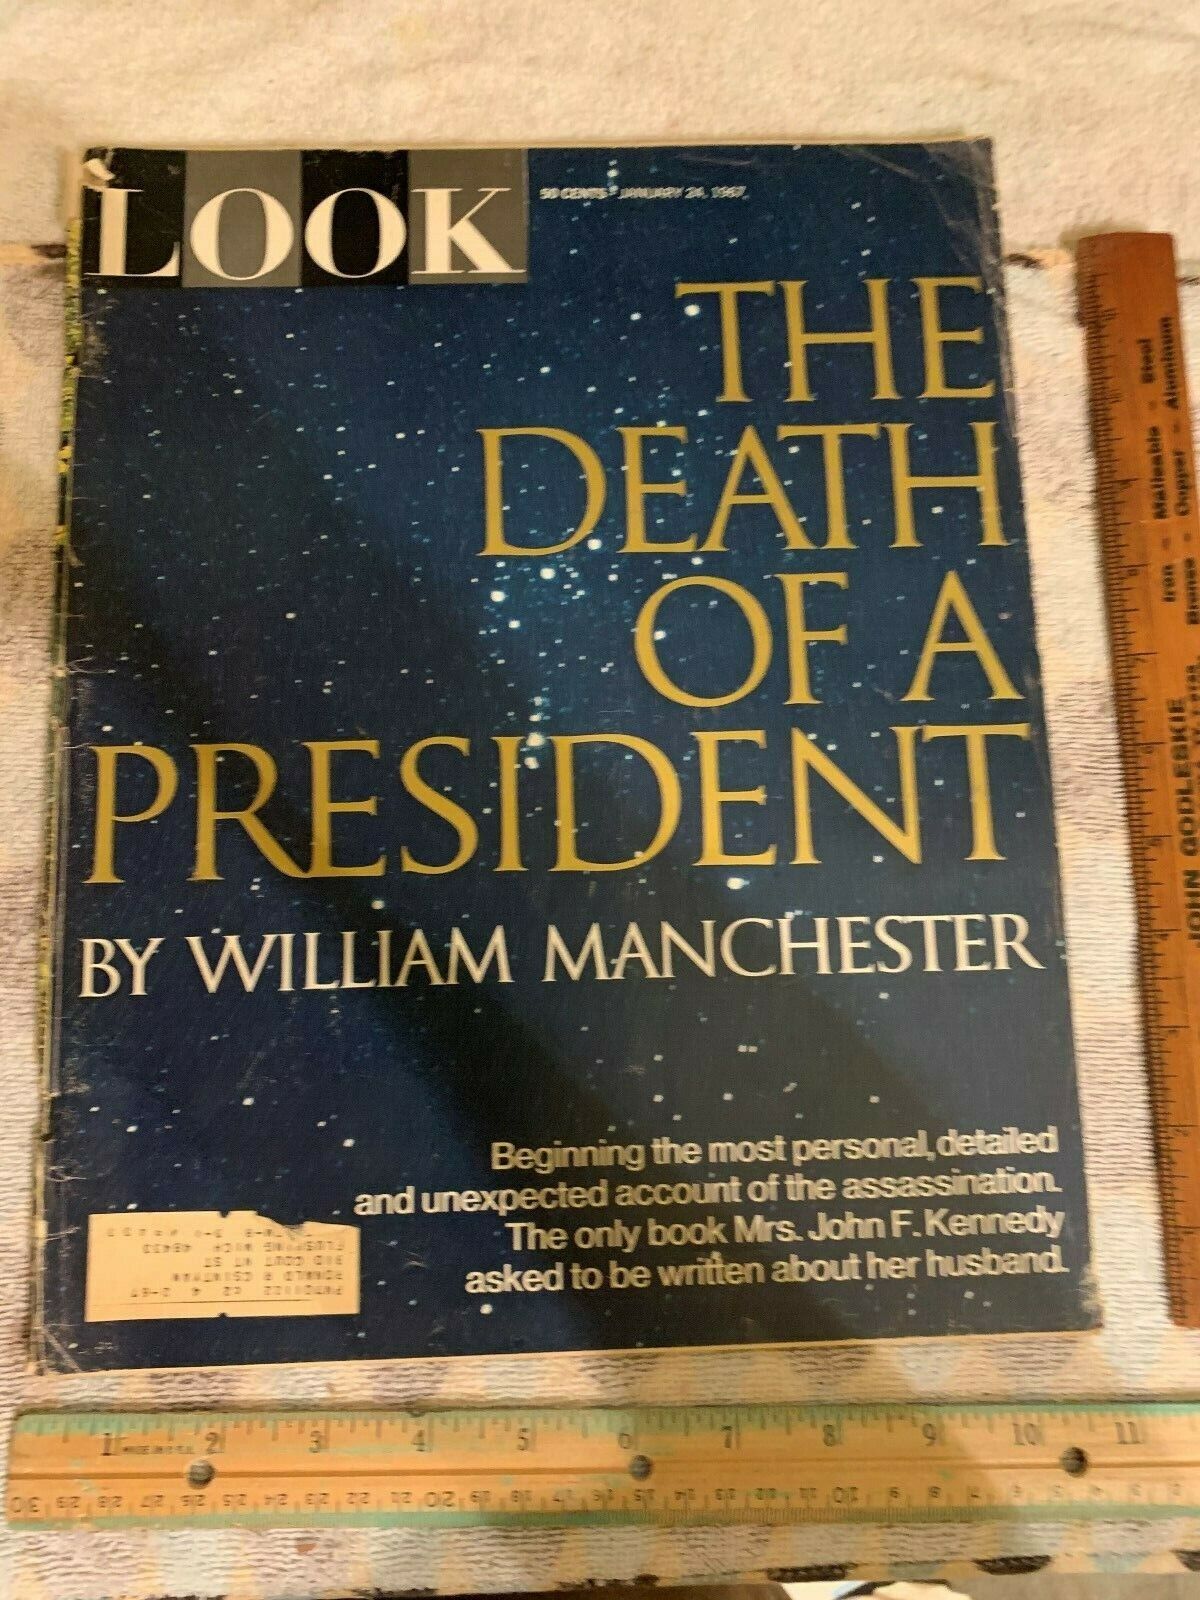 LOOK MAGAZINE THE DEATH OF A PRESIDENT JFK JANUARY 24, 1967 VINTAGE